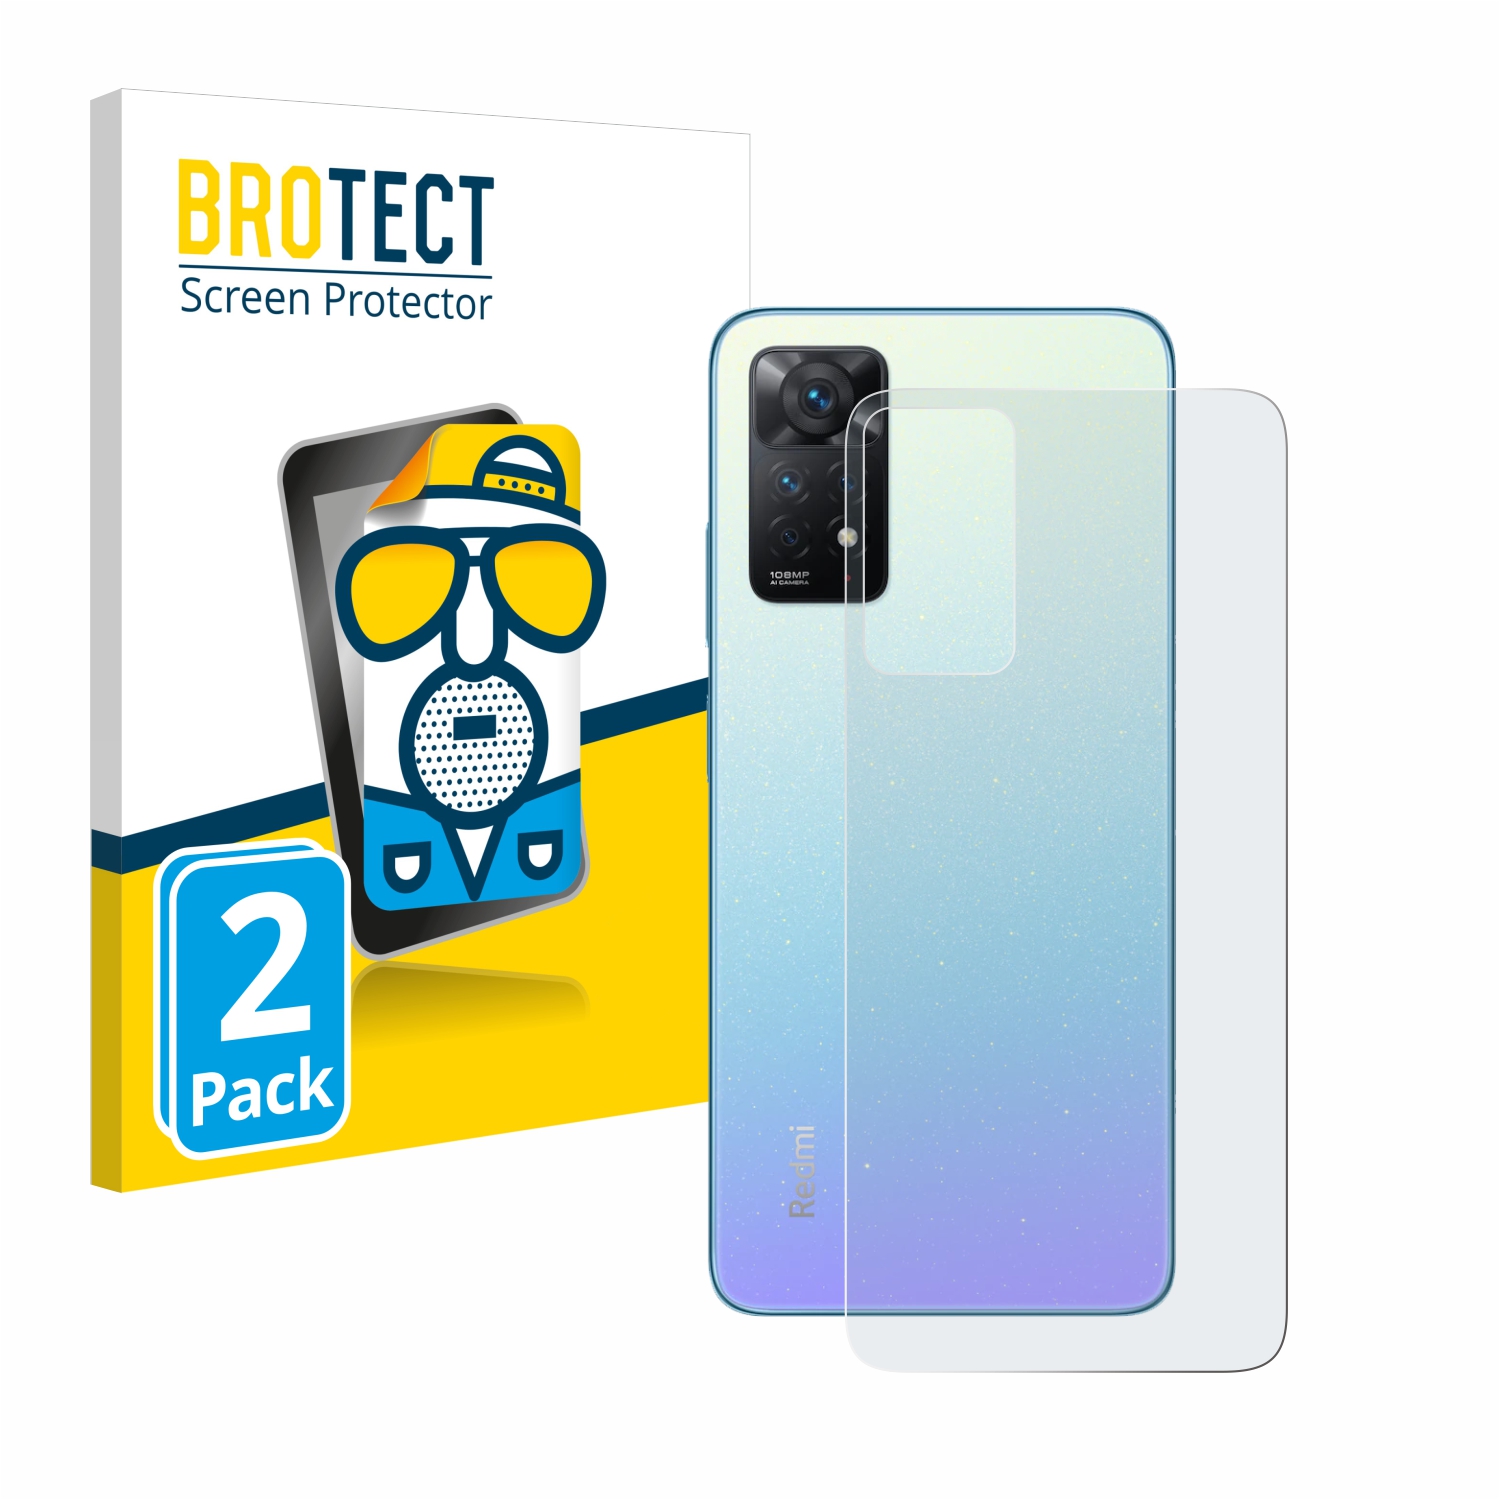 BROTECT 2x BROTECT Protection Ecran pour Xiaomi Redmi Y1 Clair Film Protection 